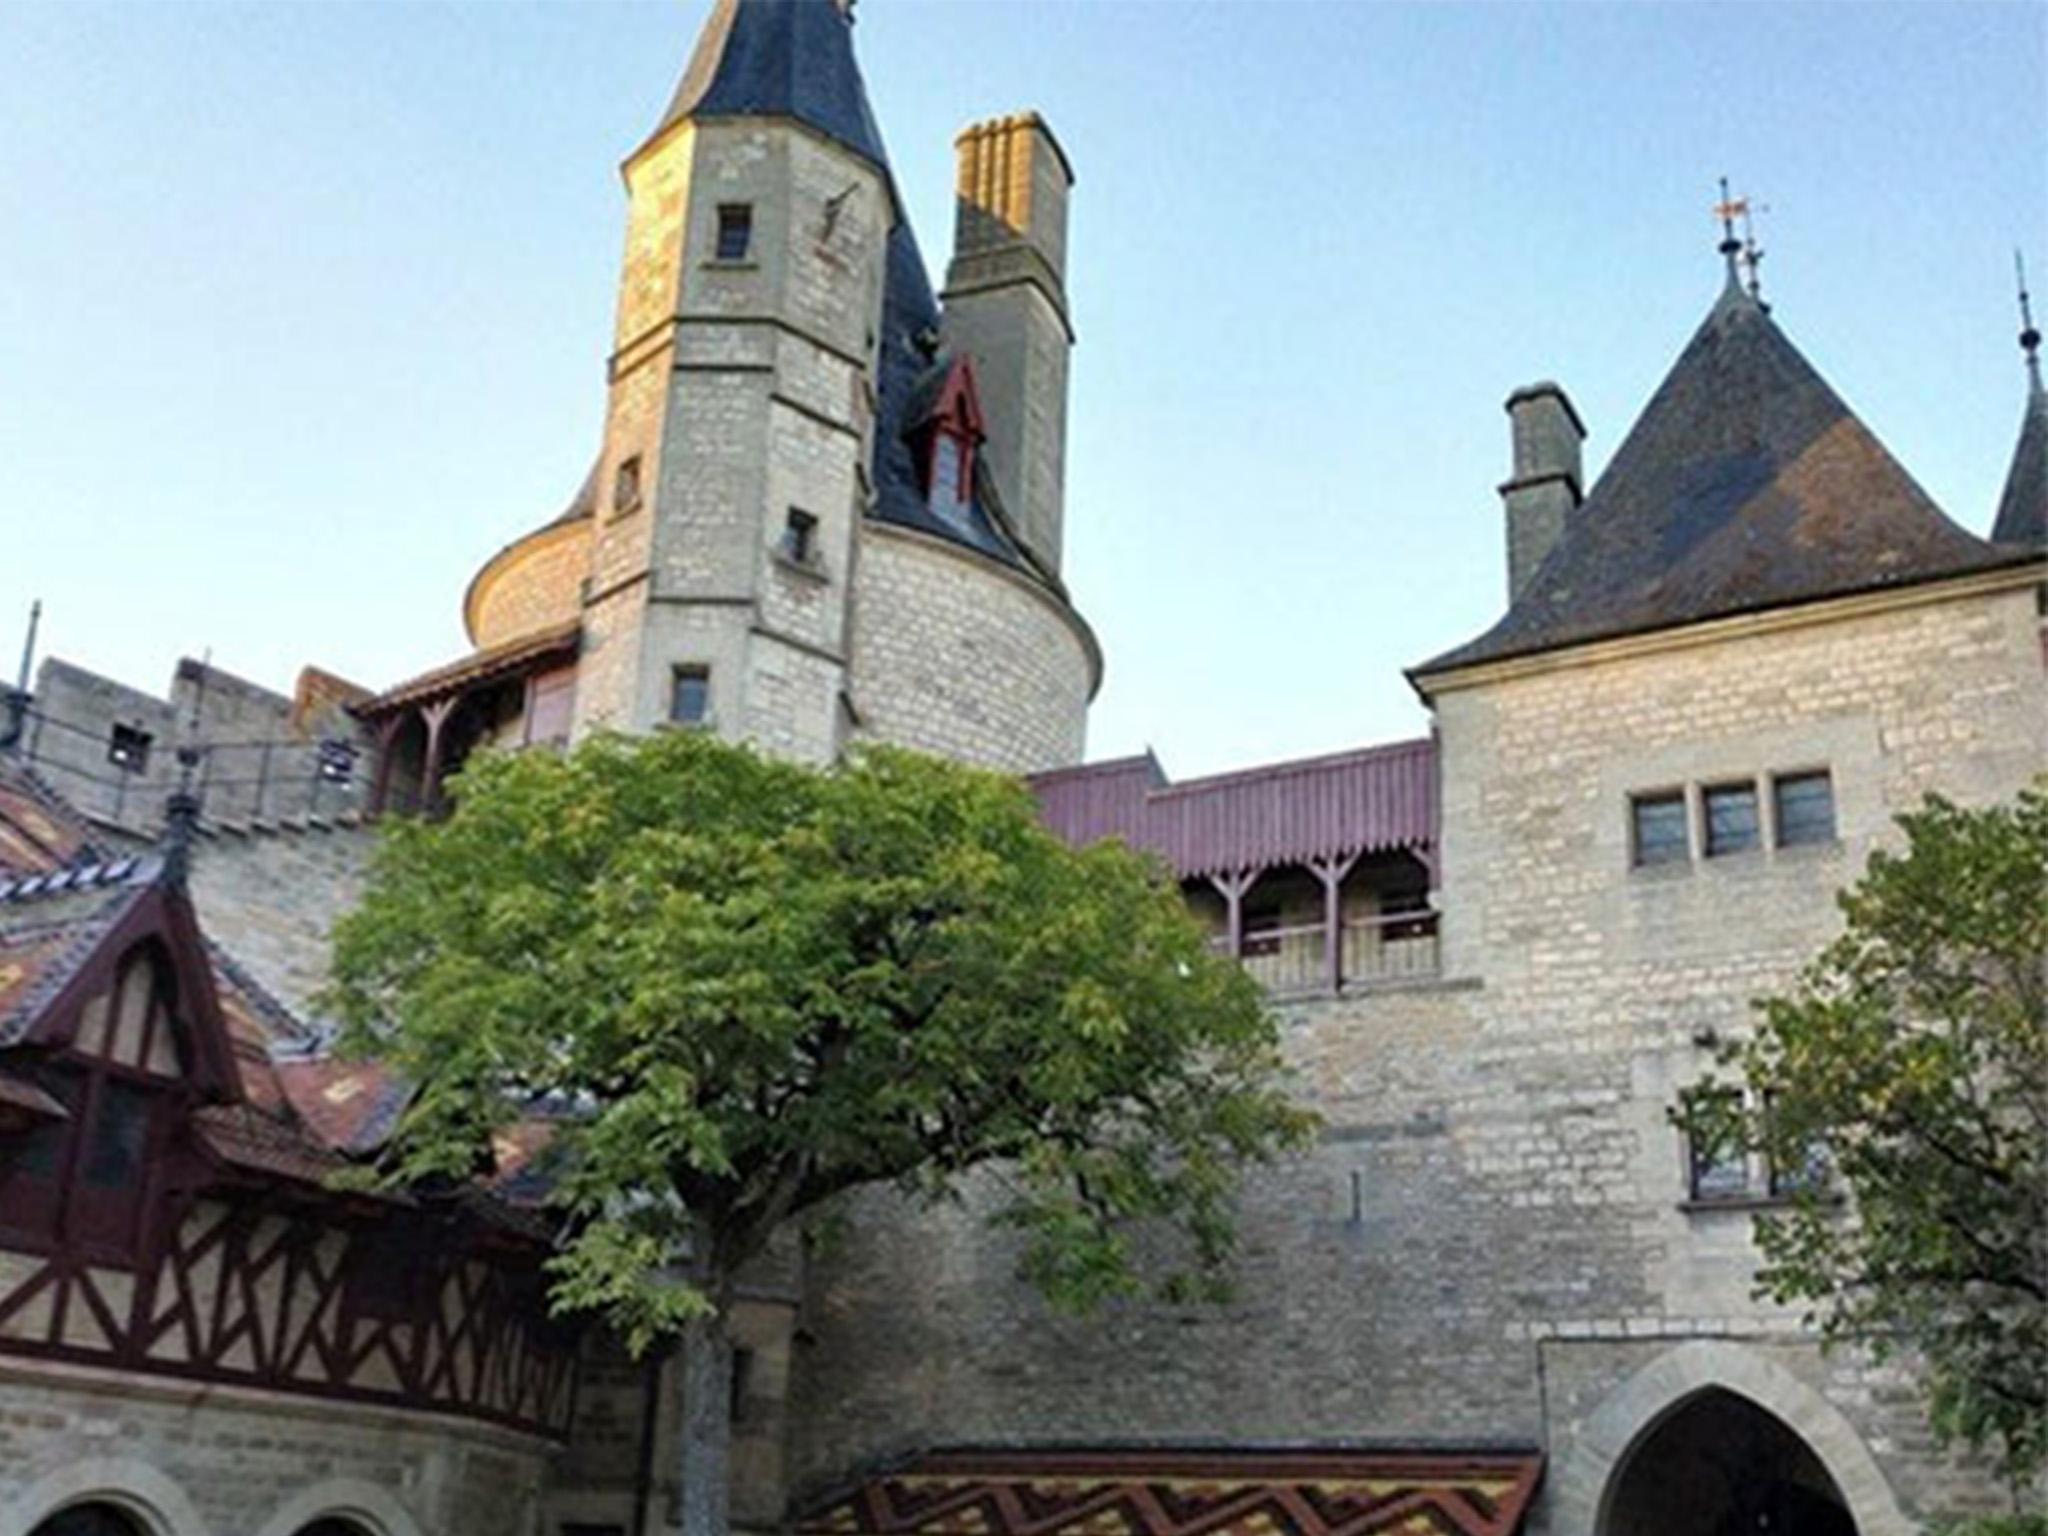 The castle, known as the Chateau de la Rochepot, is valued at €3m